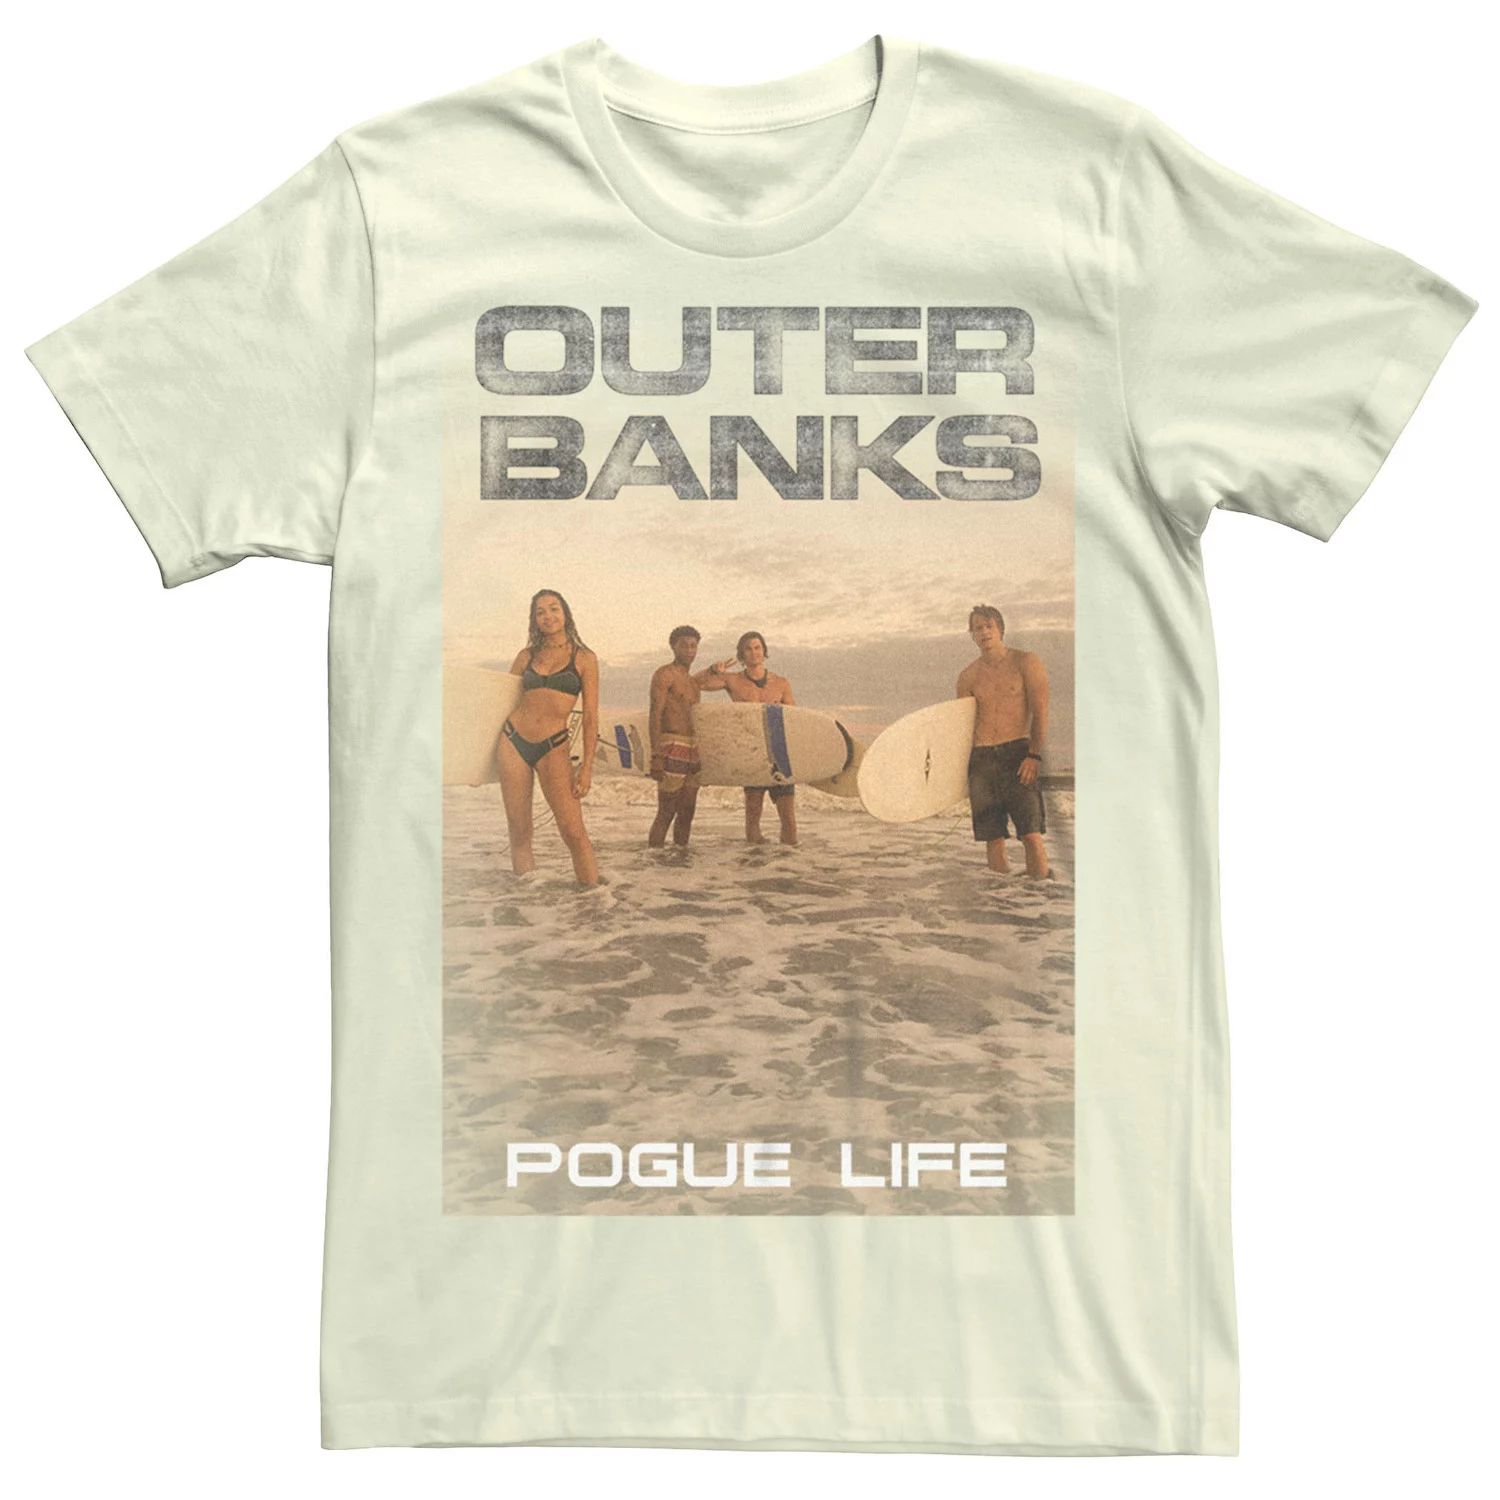 Мужская пляжная футболка с рисунком Outer Banks Pogue Life Licensed Character мужская футболка outer banks obx pogue life licensed character